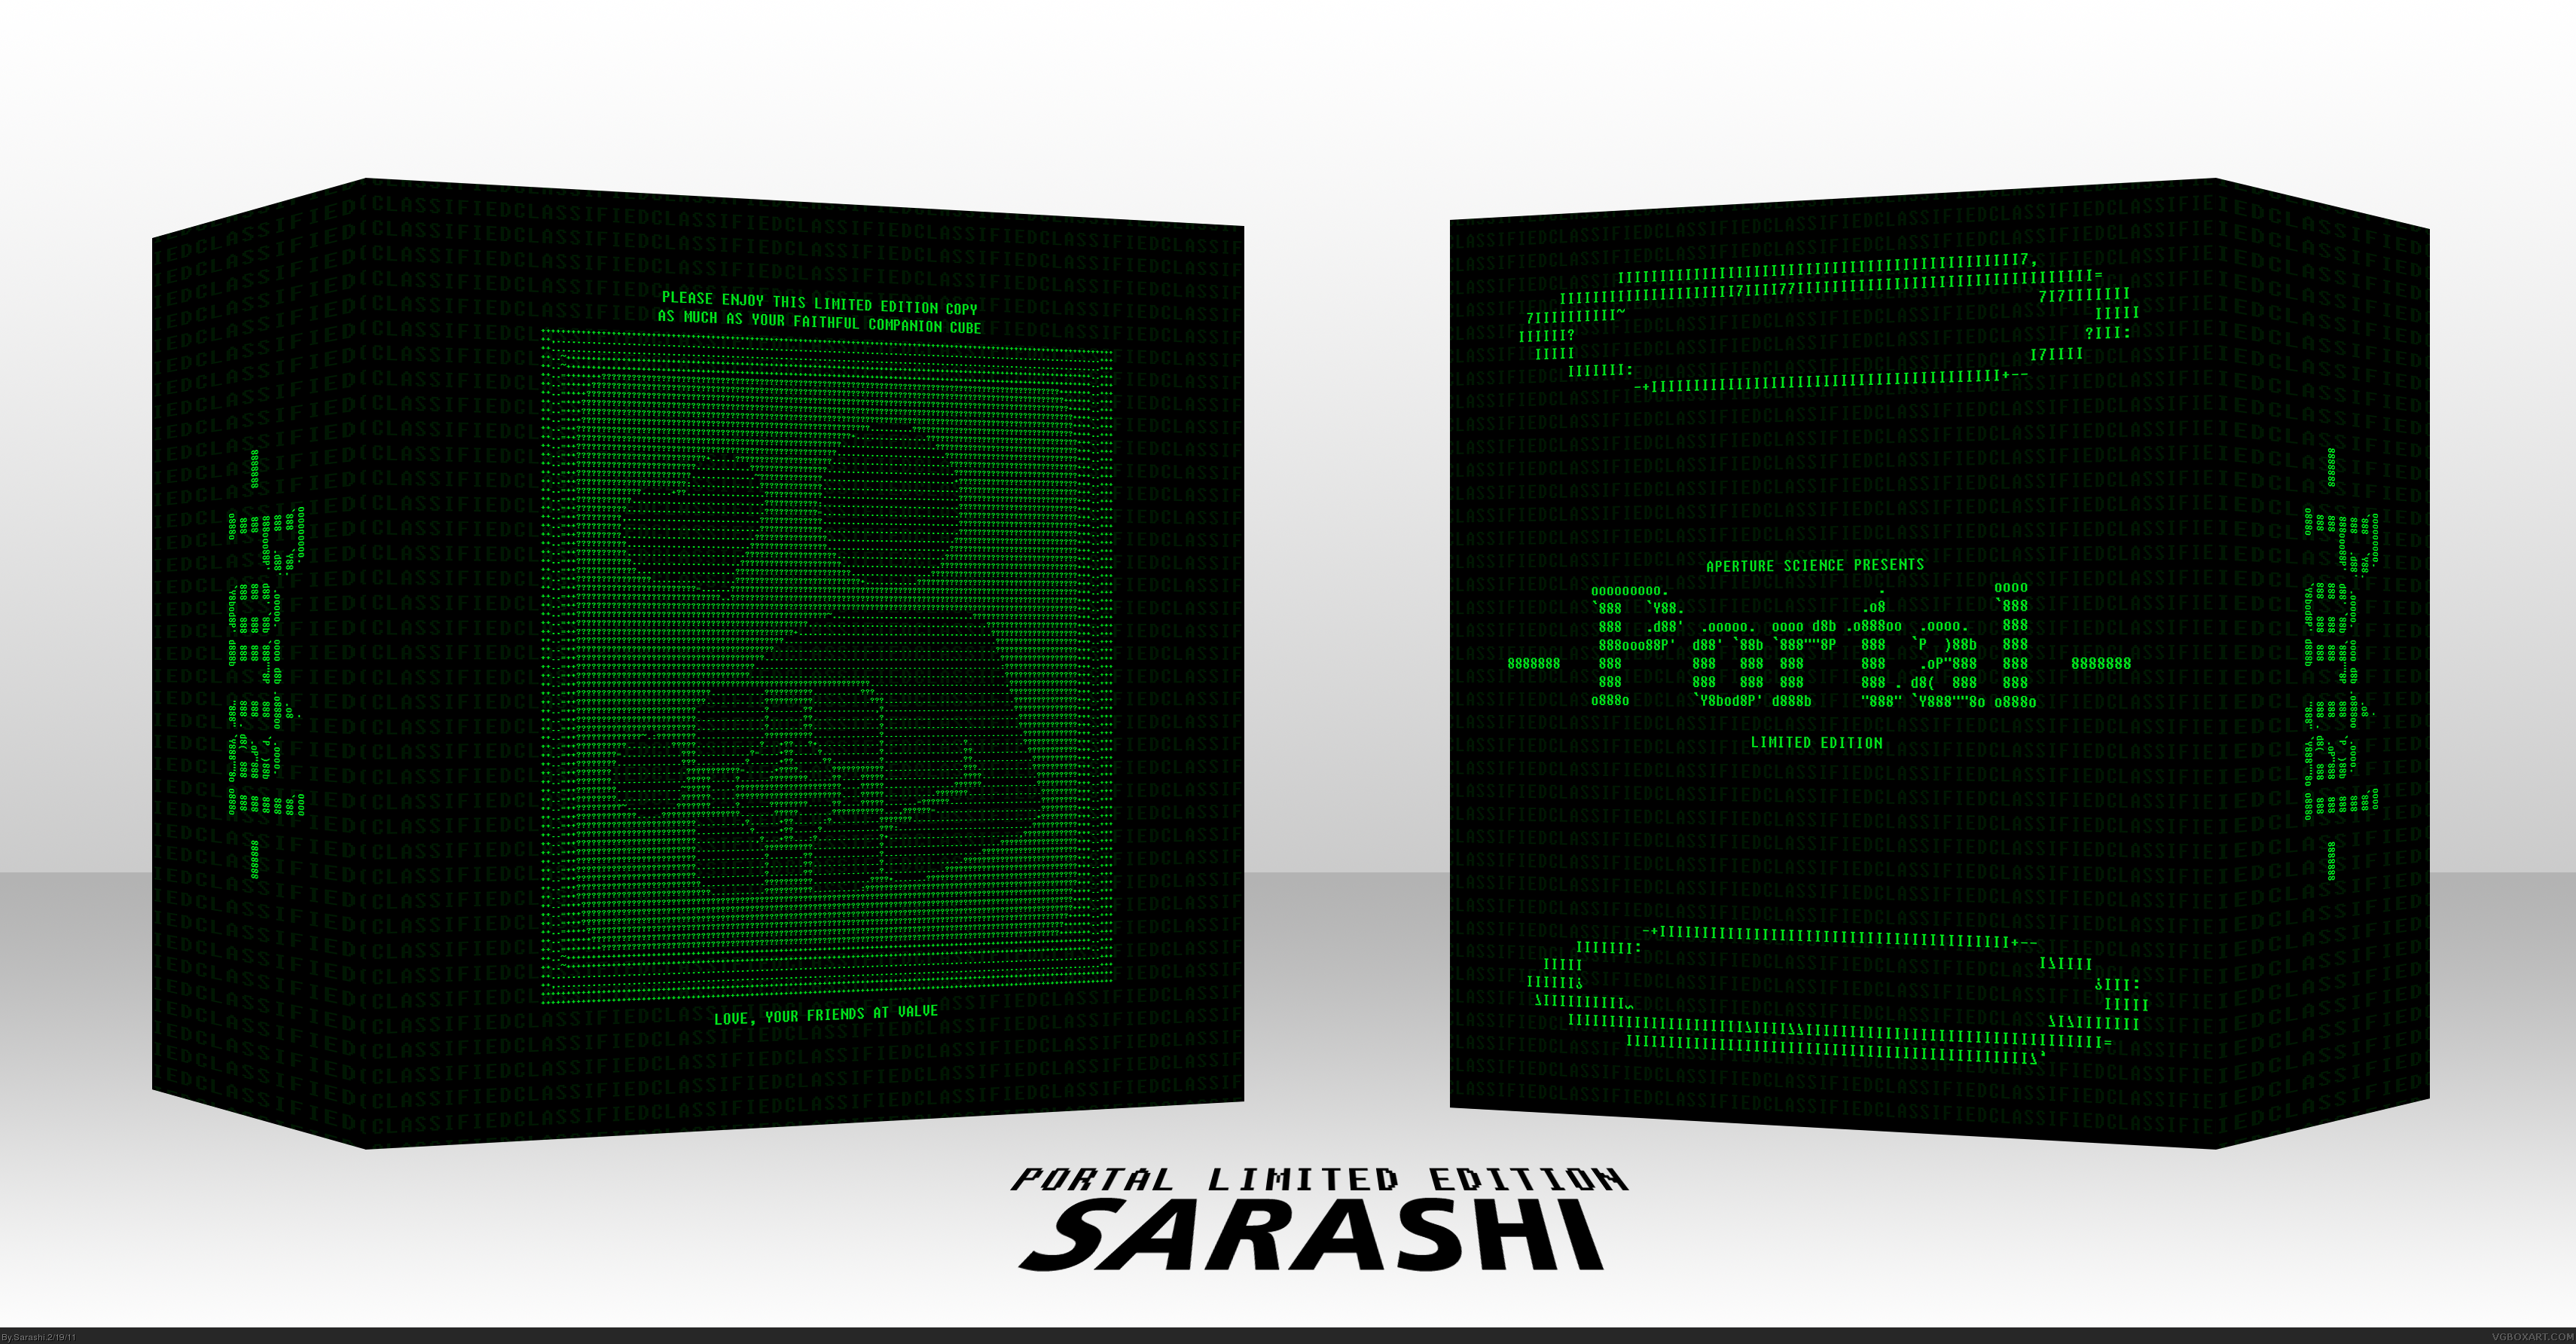 Portal: Limited Edition box cover